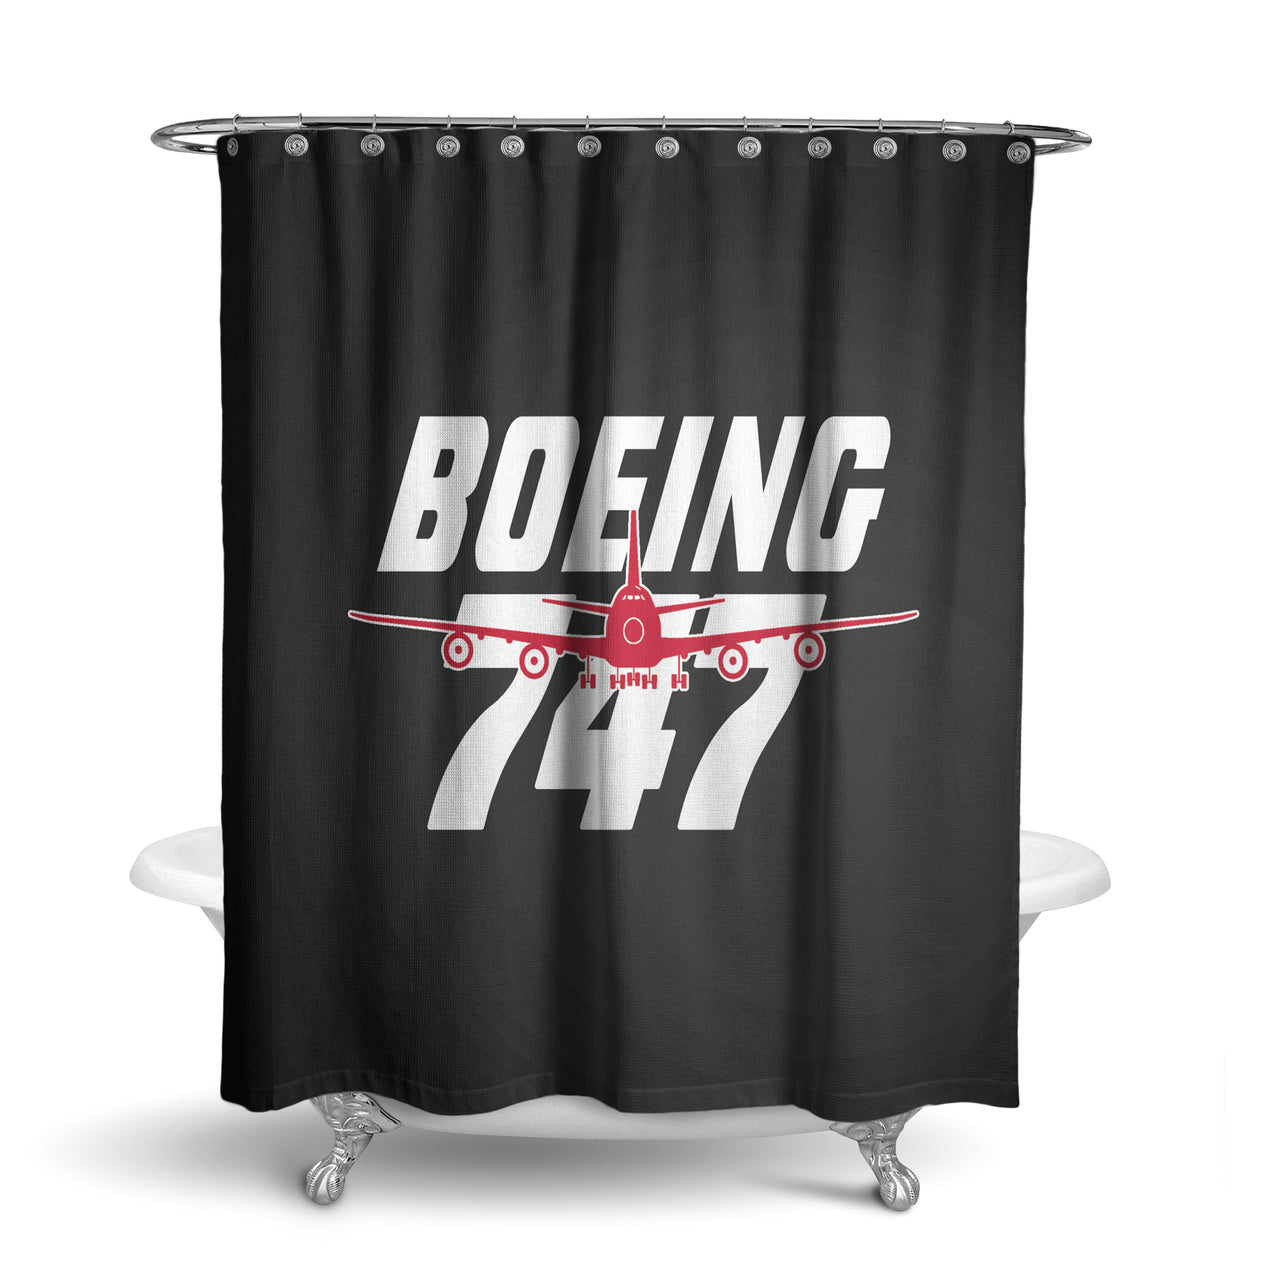 Amazing Boeing 747 Designed Shower Curtains